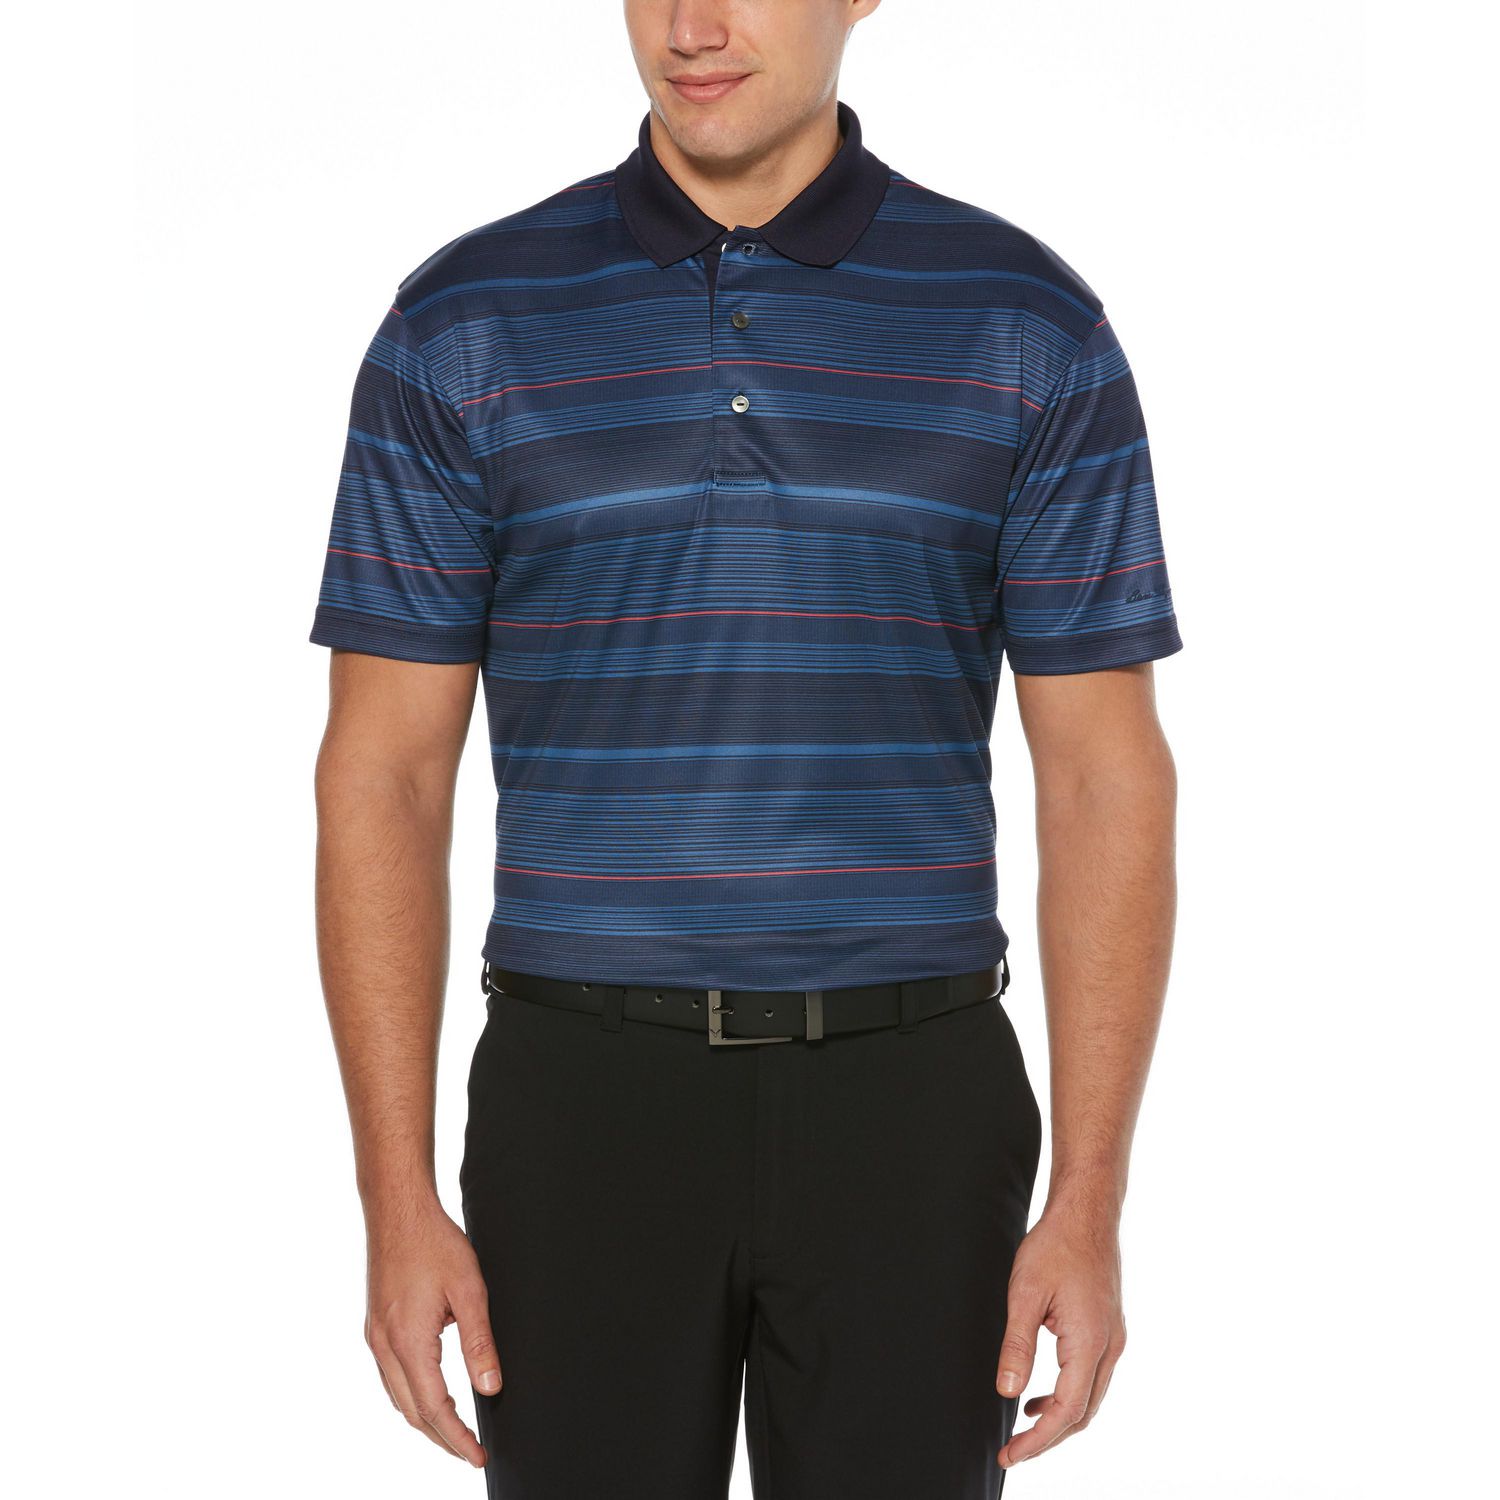 Men's Performance Short Sleeve Striped Golf Polo Shirt | Walmart Canada